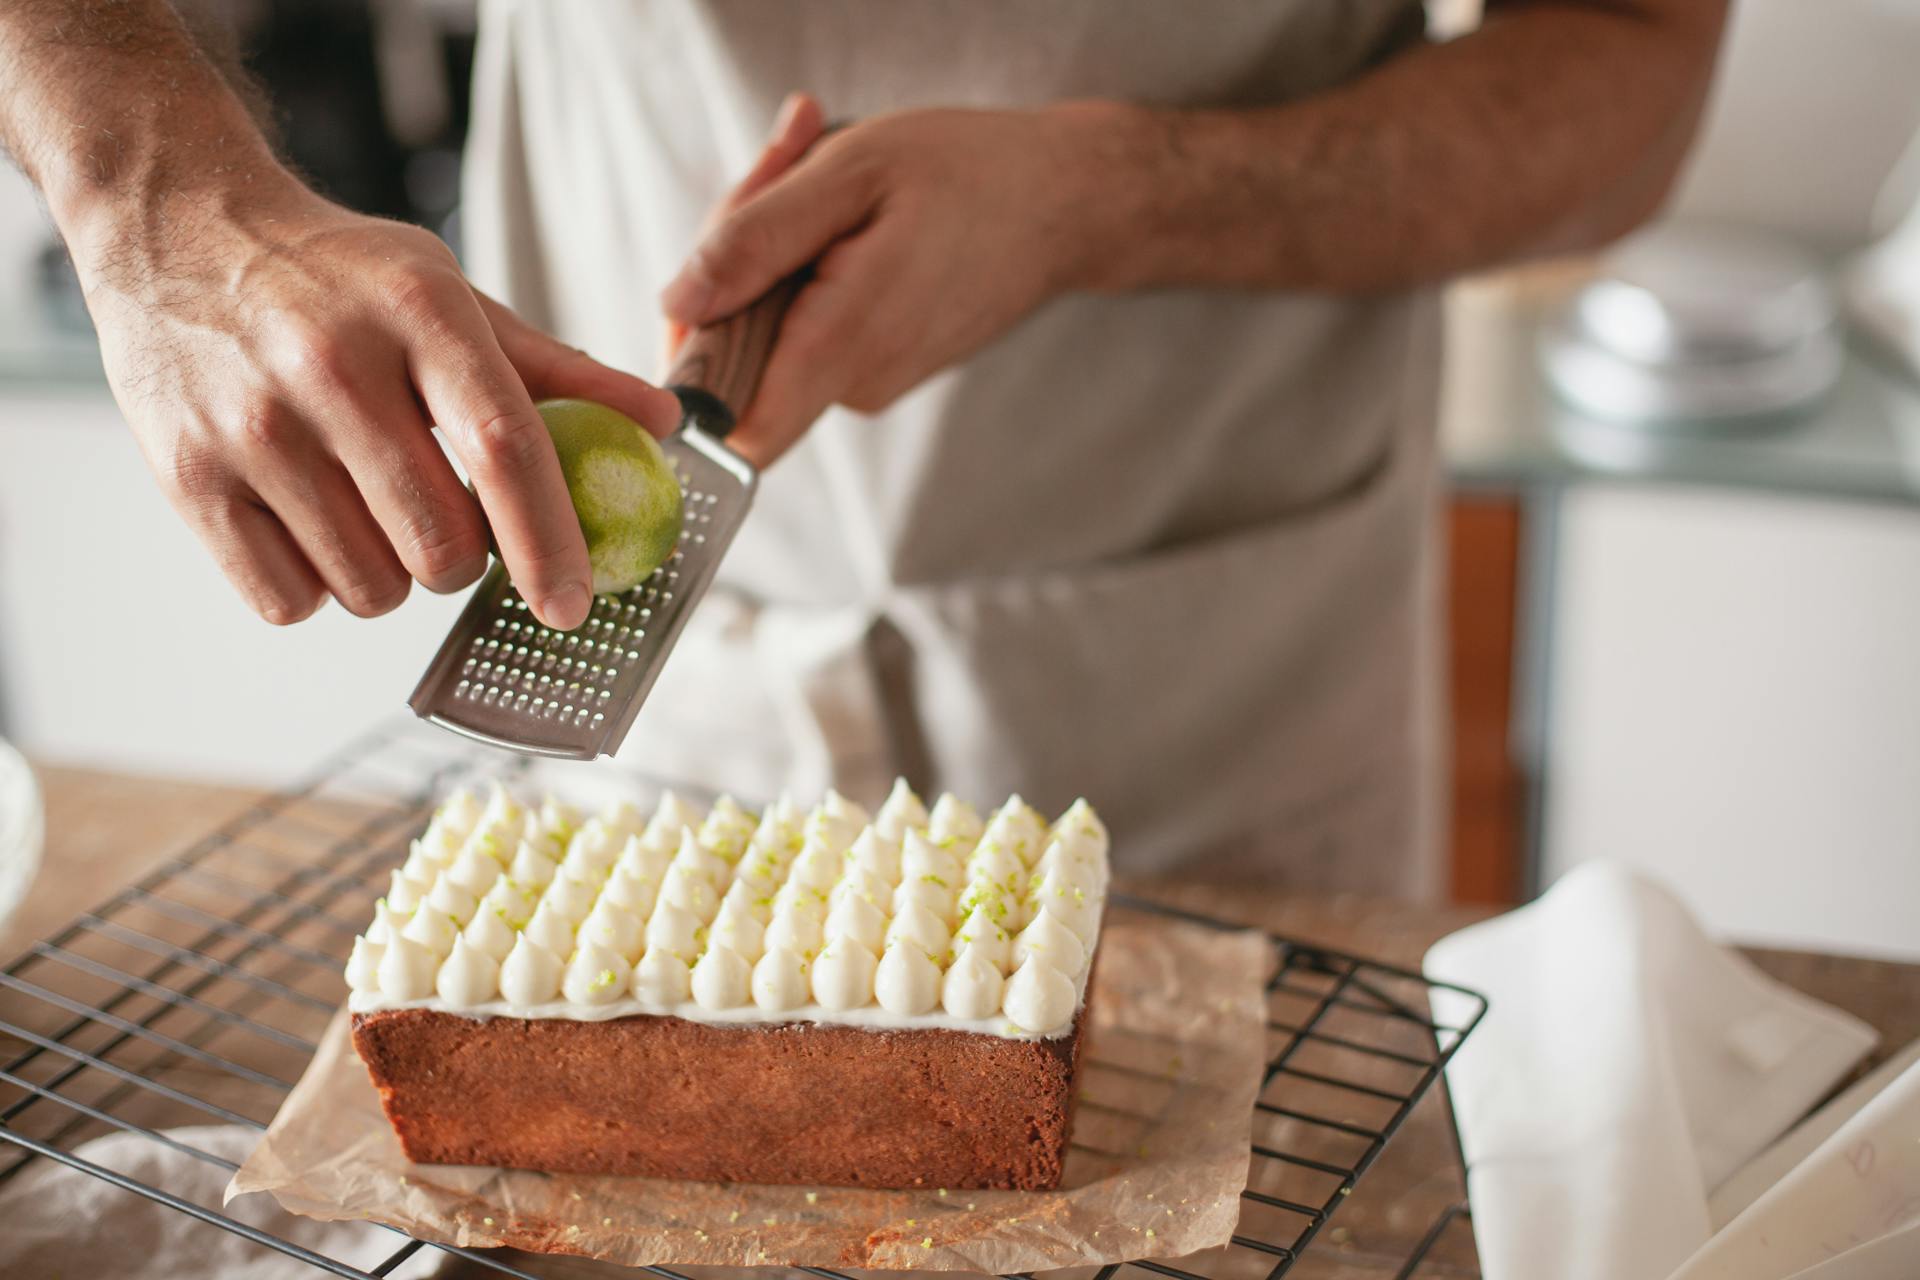 Close-up of a Person Grating Lemon Zest over a Cake